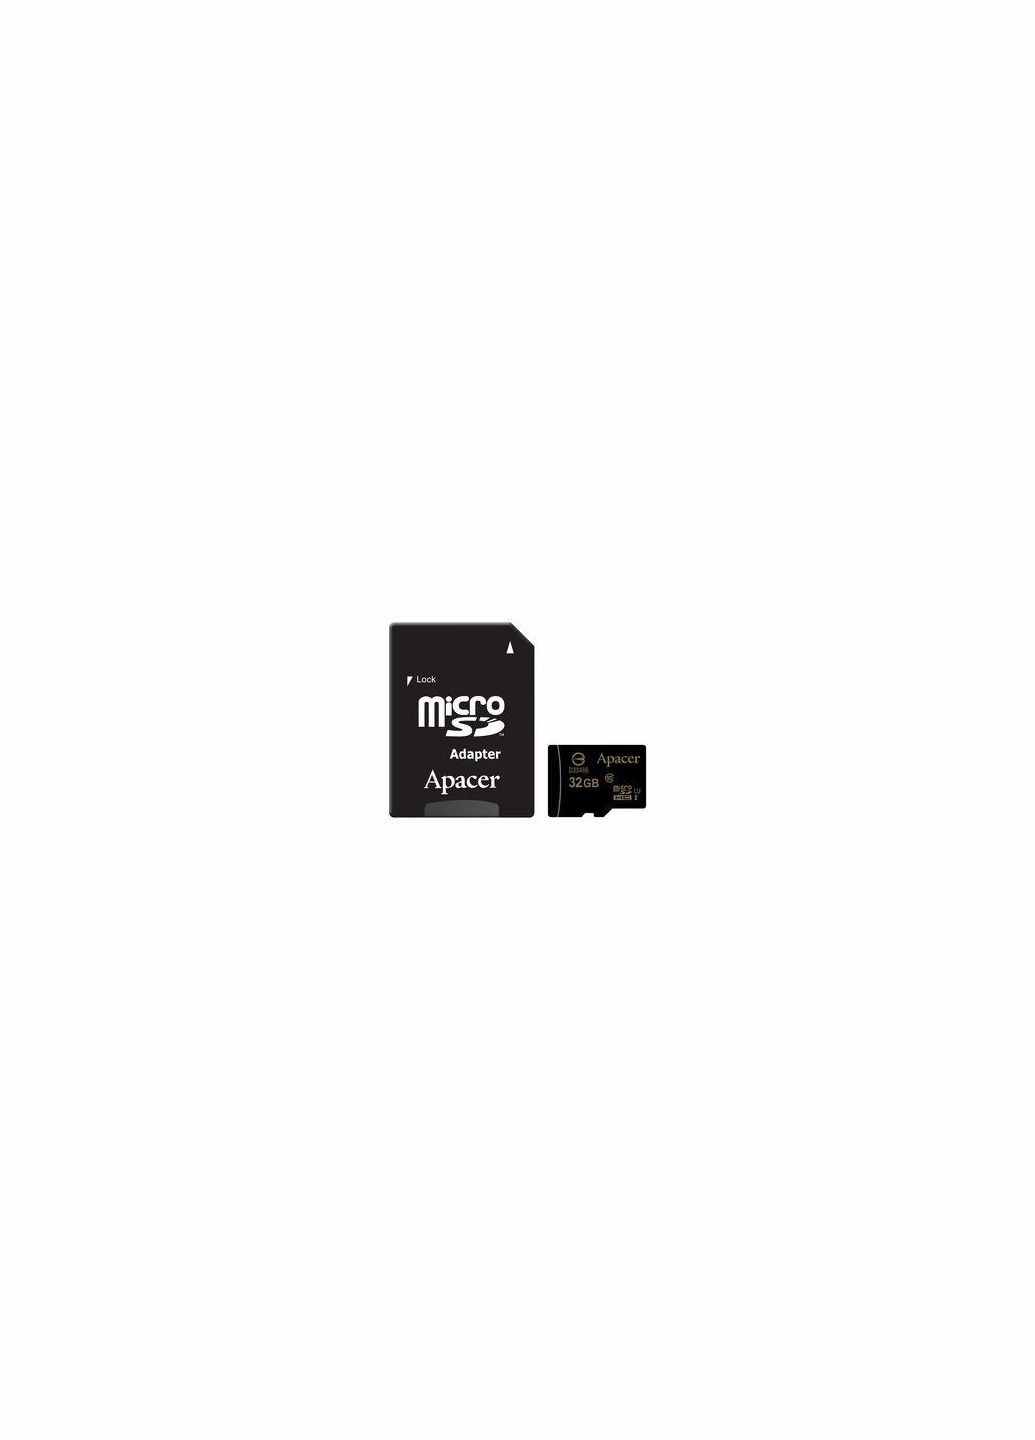 Картка пам'яті microSDHC 32 GB Class 10 + SDадаптер Apacer (277634716)